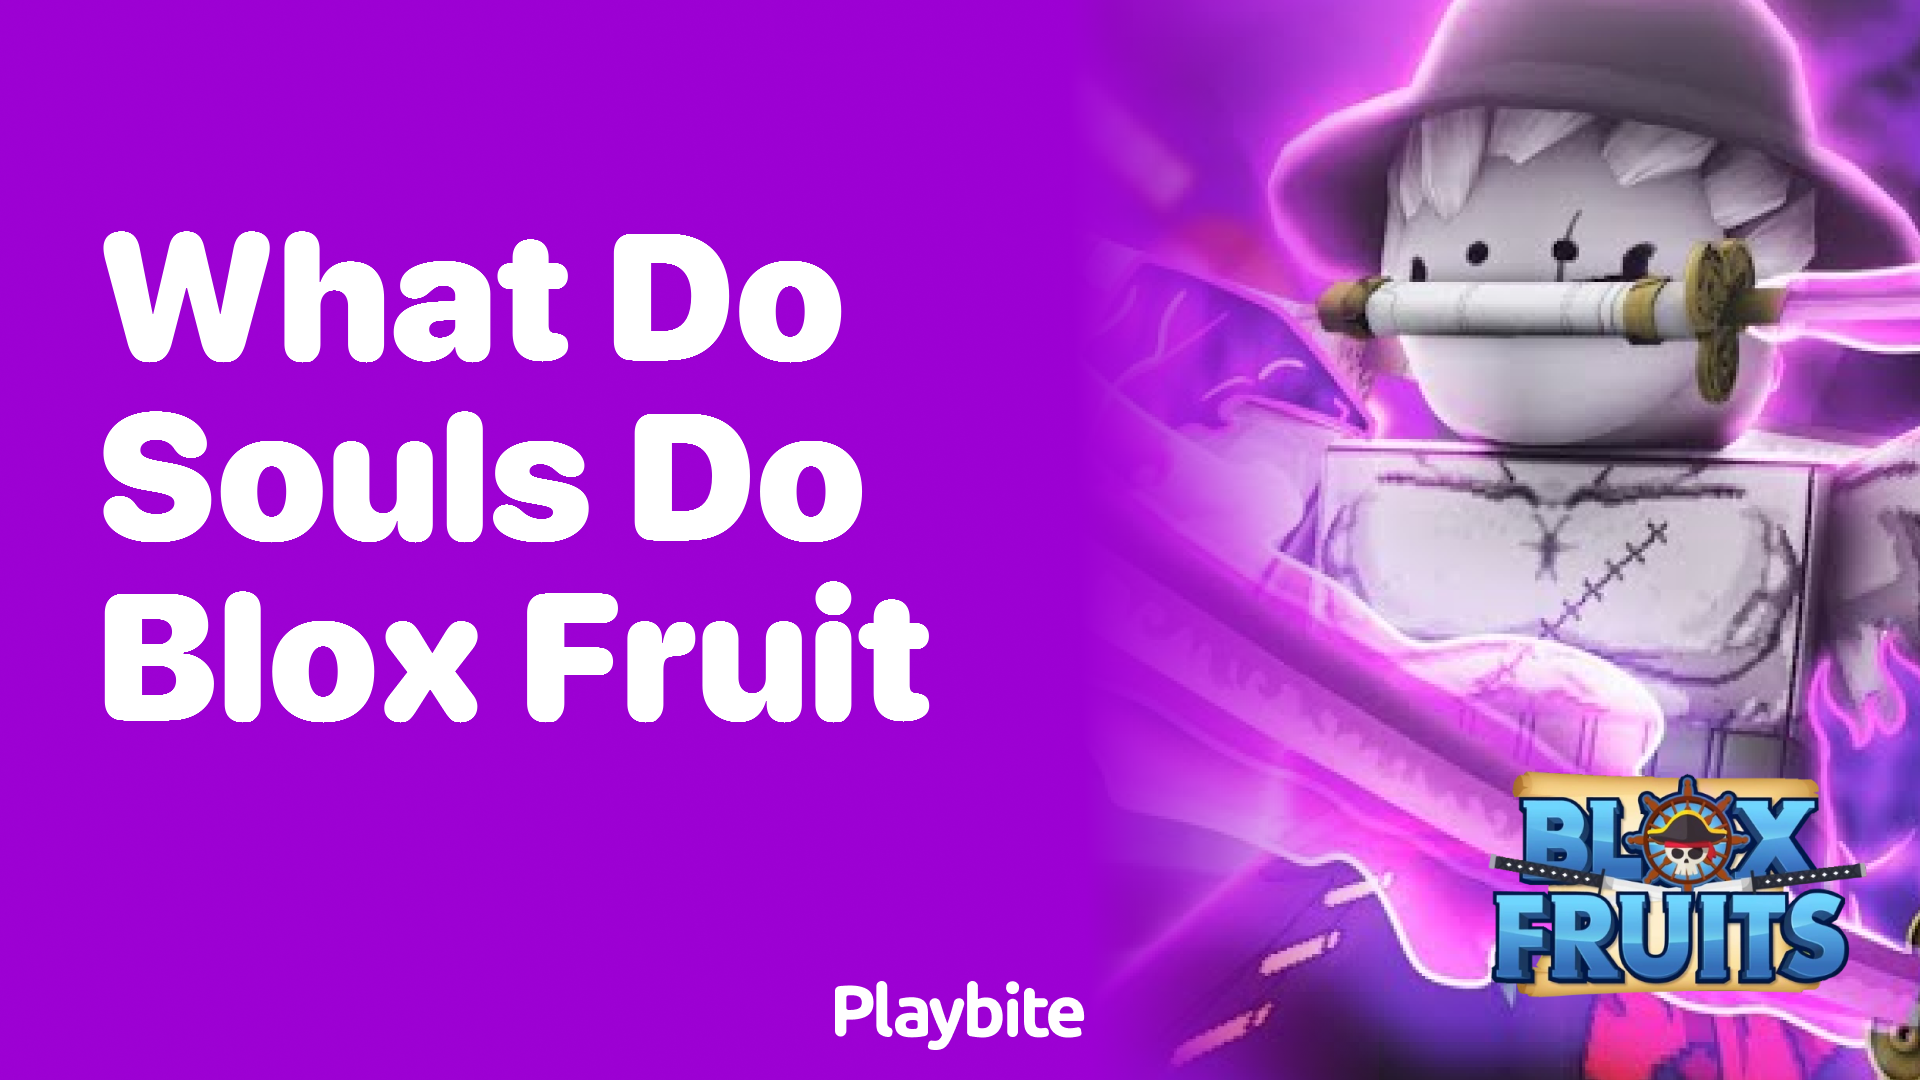 What Do Souls Do in Blox Fruit?